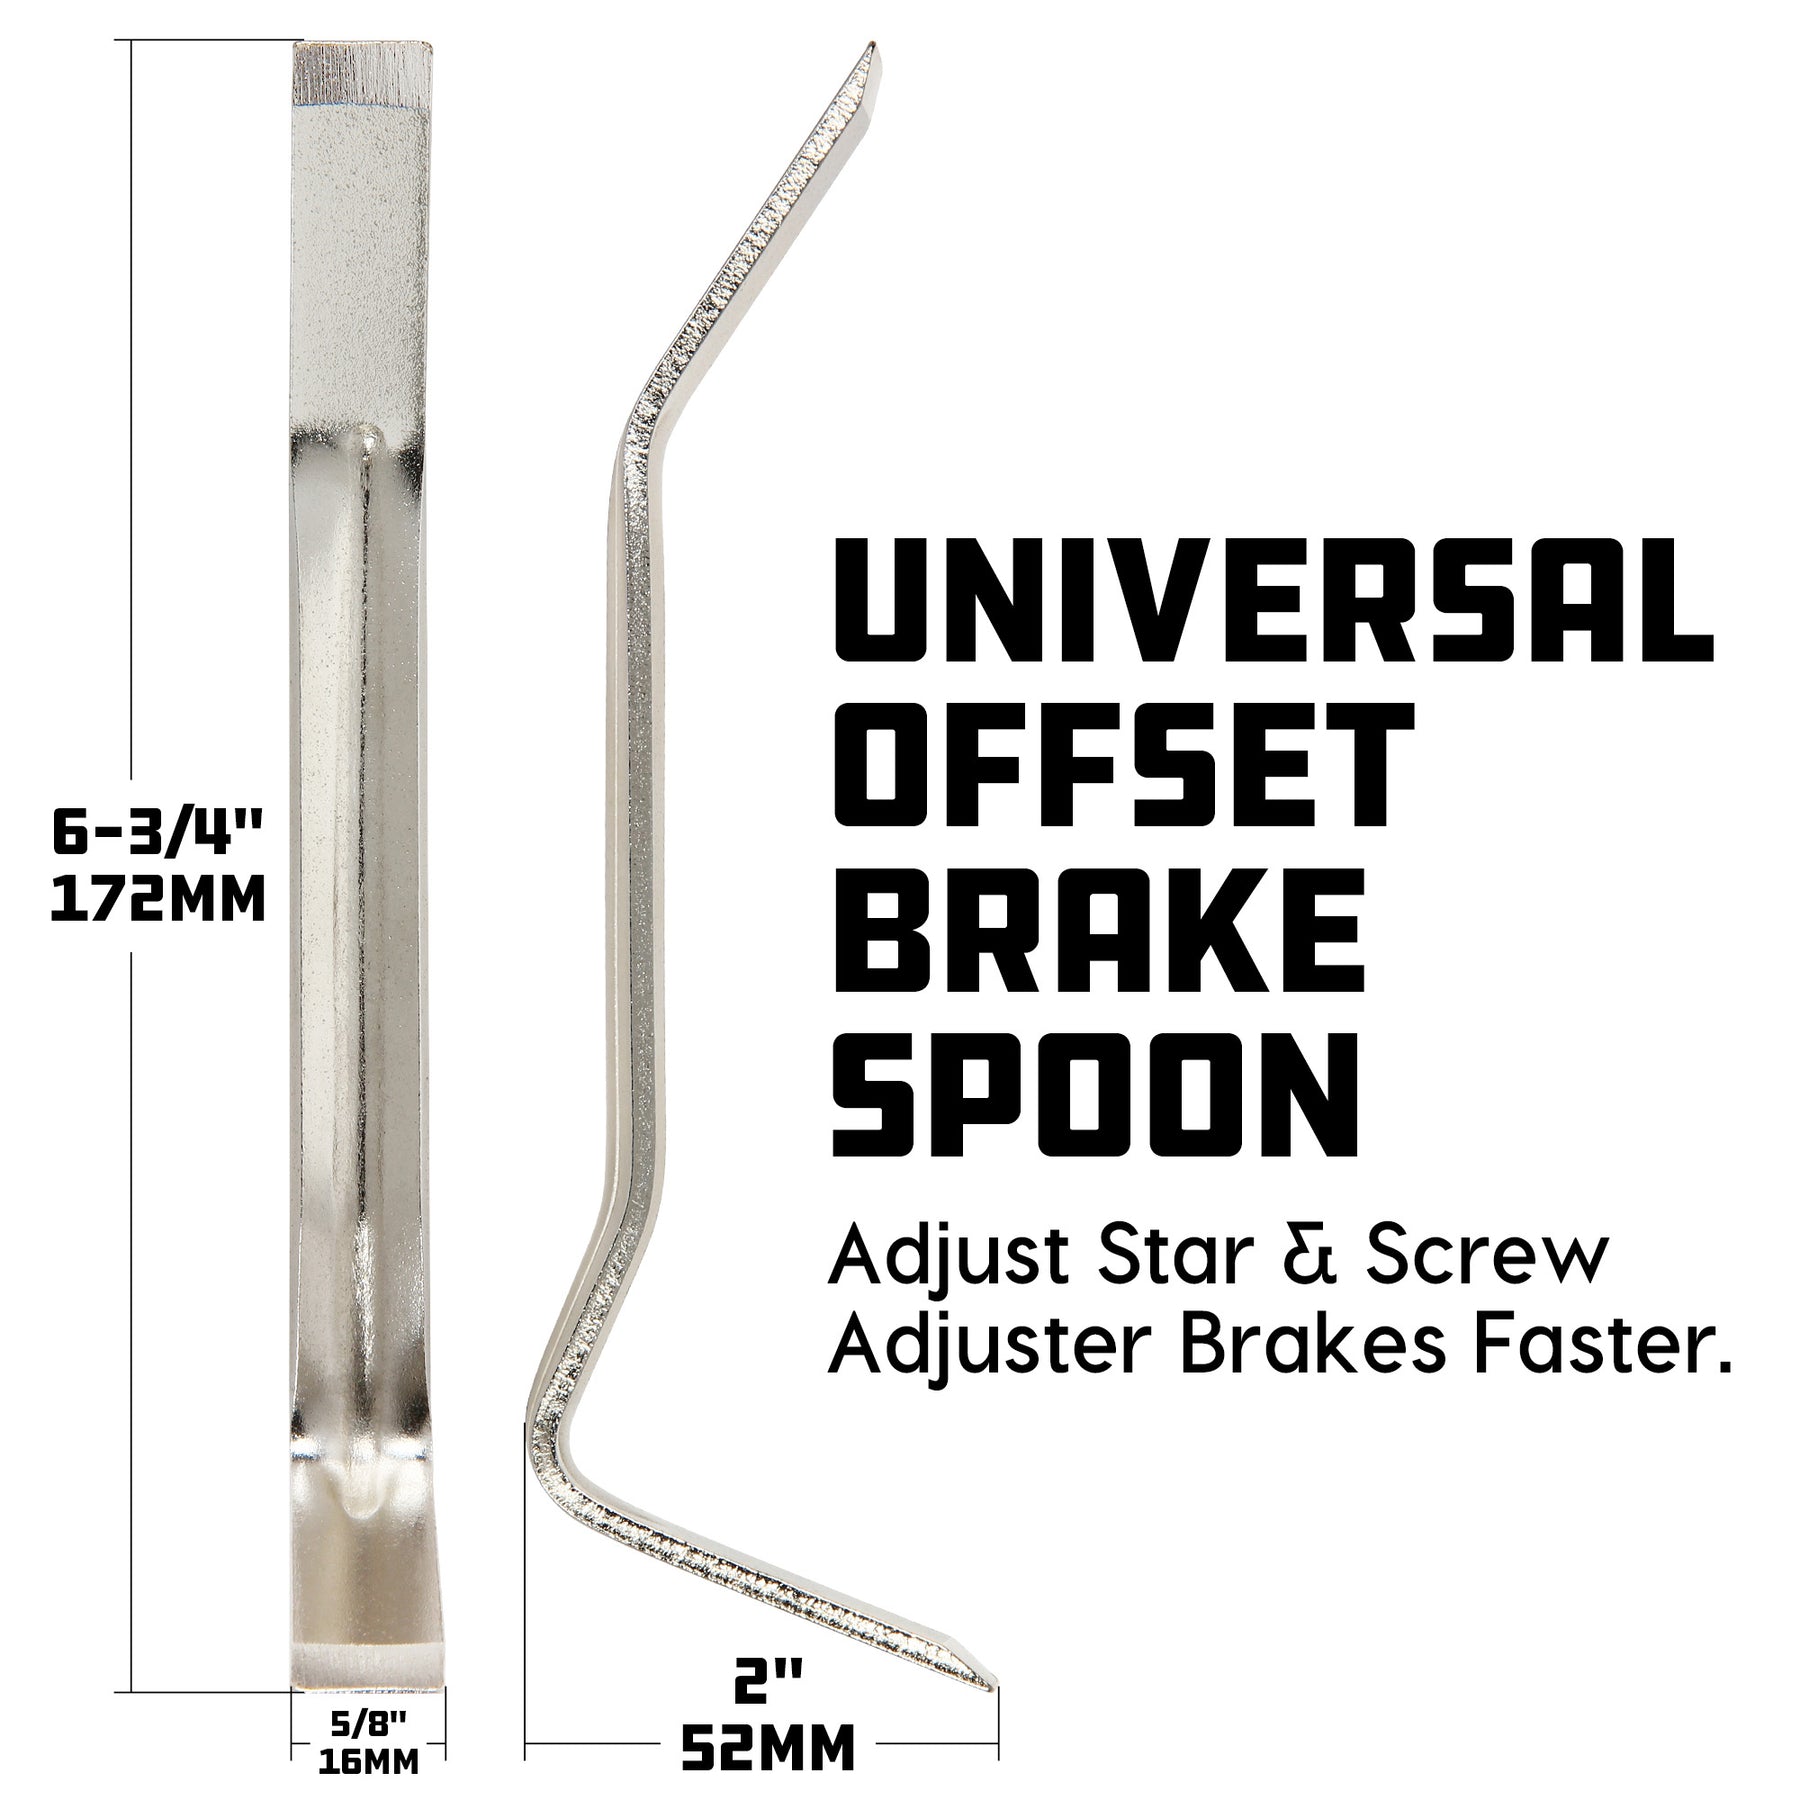 Universal Offset Brake Spoon